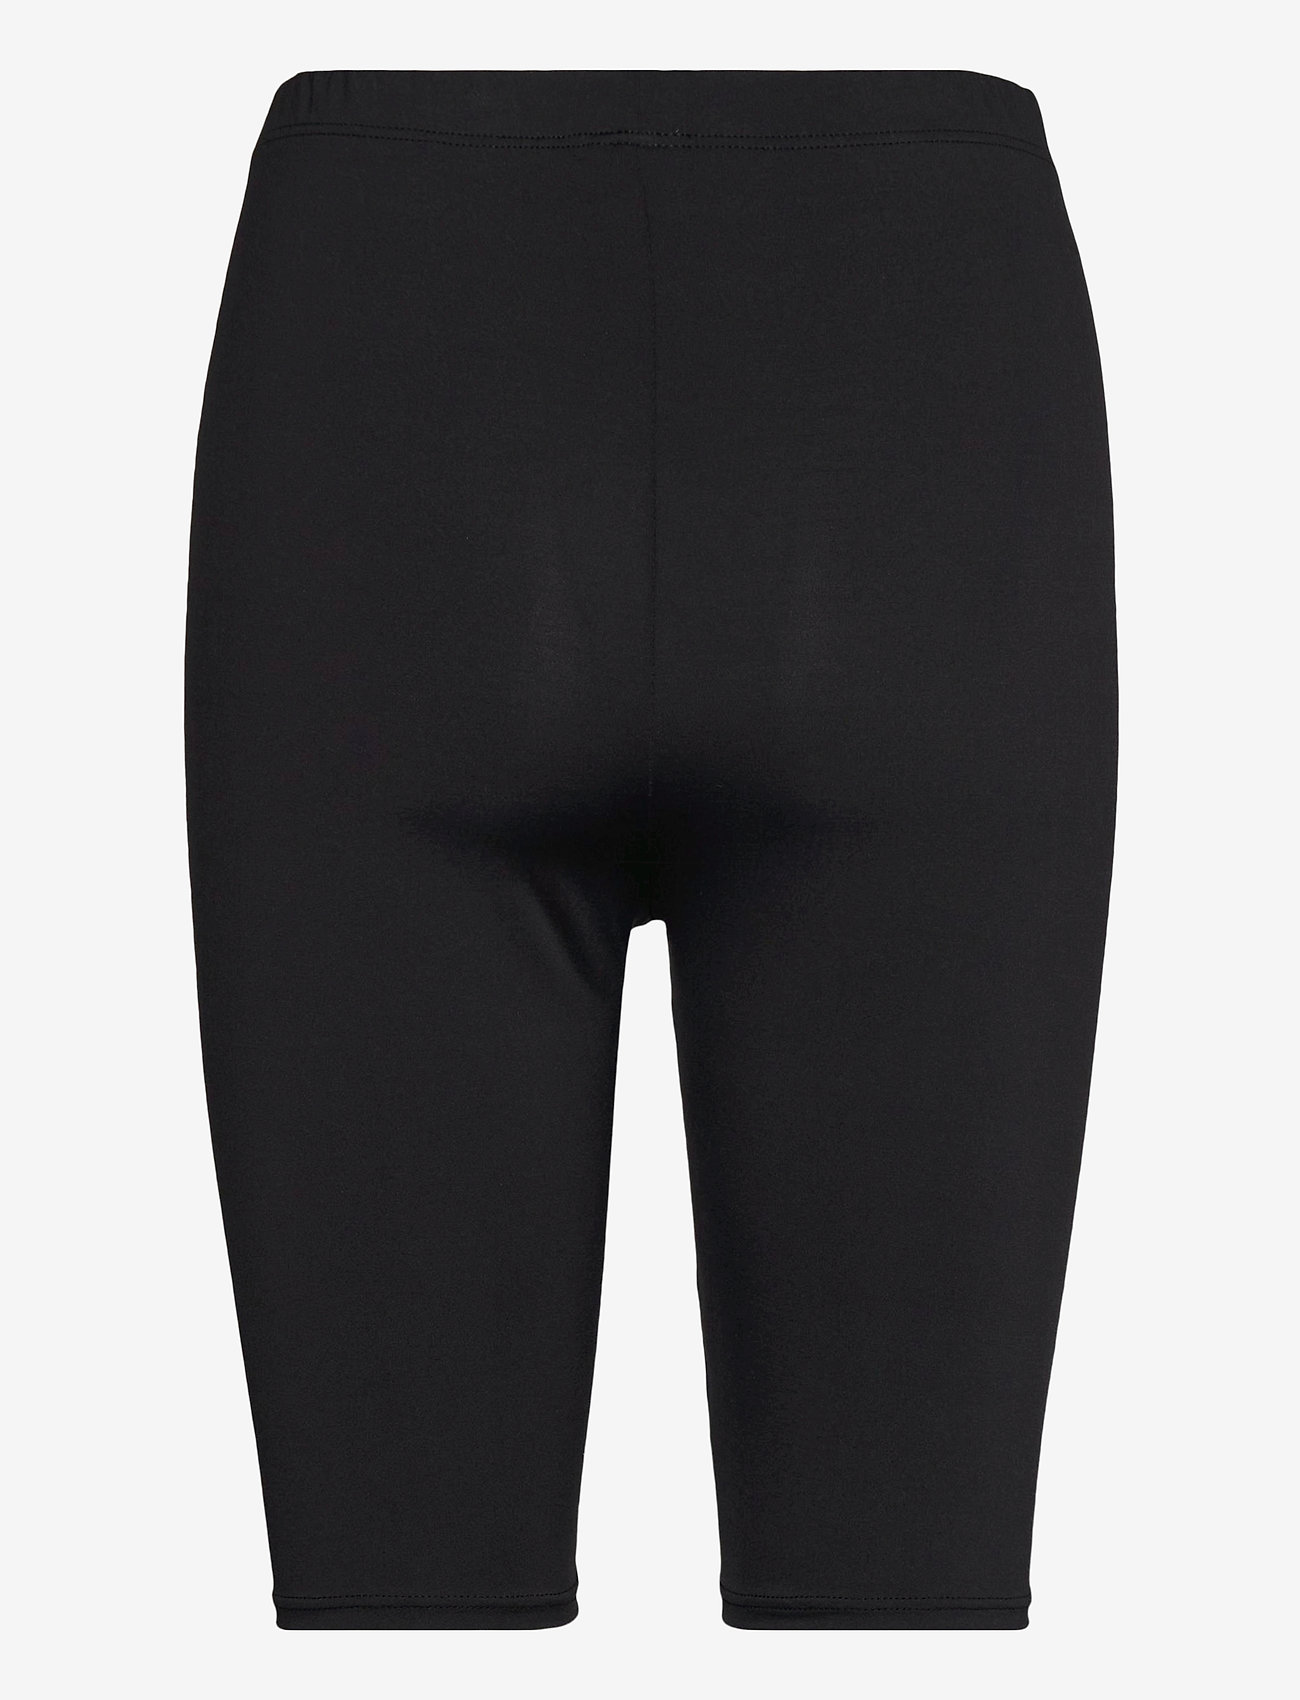 Gestuz - PiloGZ MW short tights - cycling shorts - black - 1